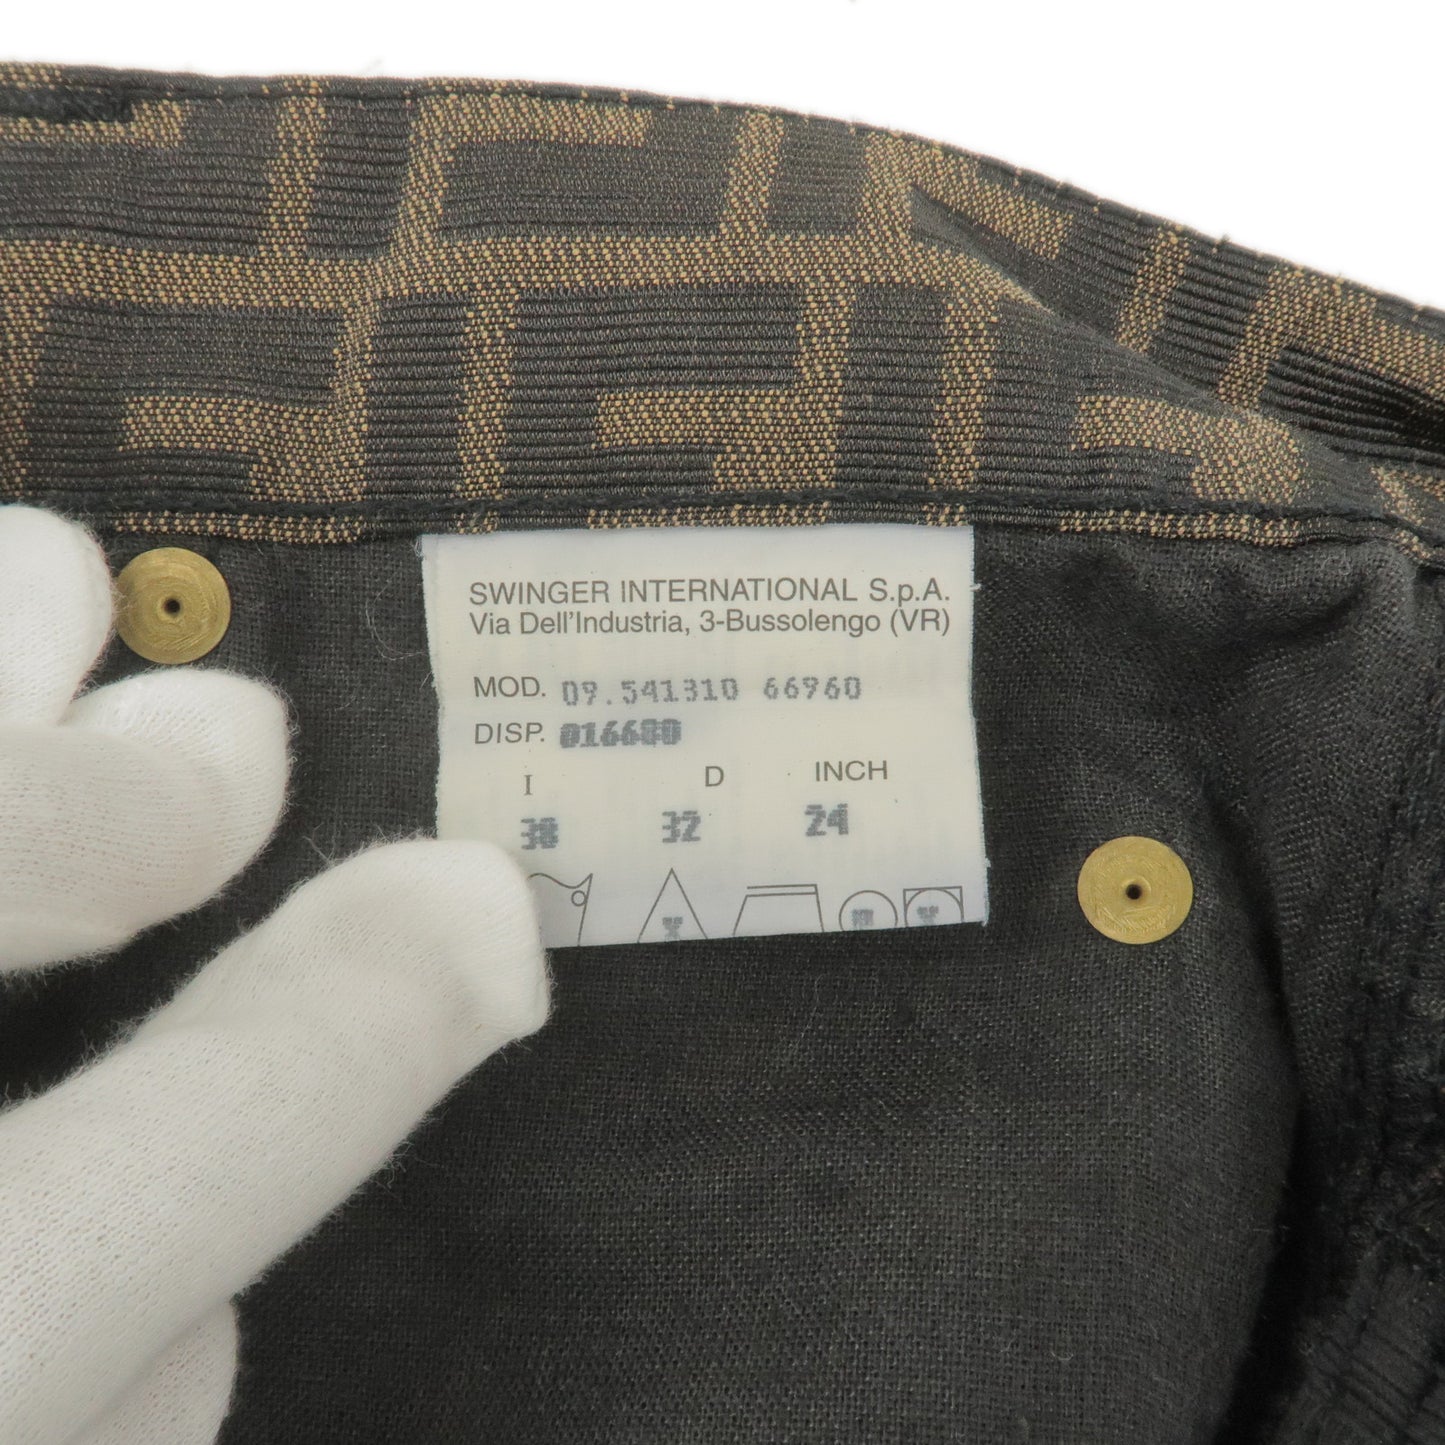 FENDI Zucca Print Polyester Cotton Skirt Size 24 09.541310 69960